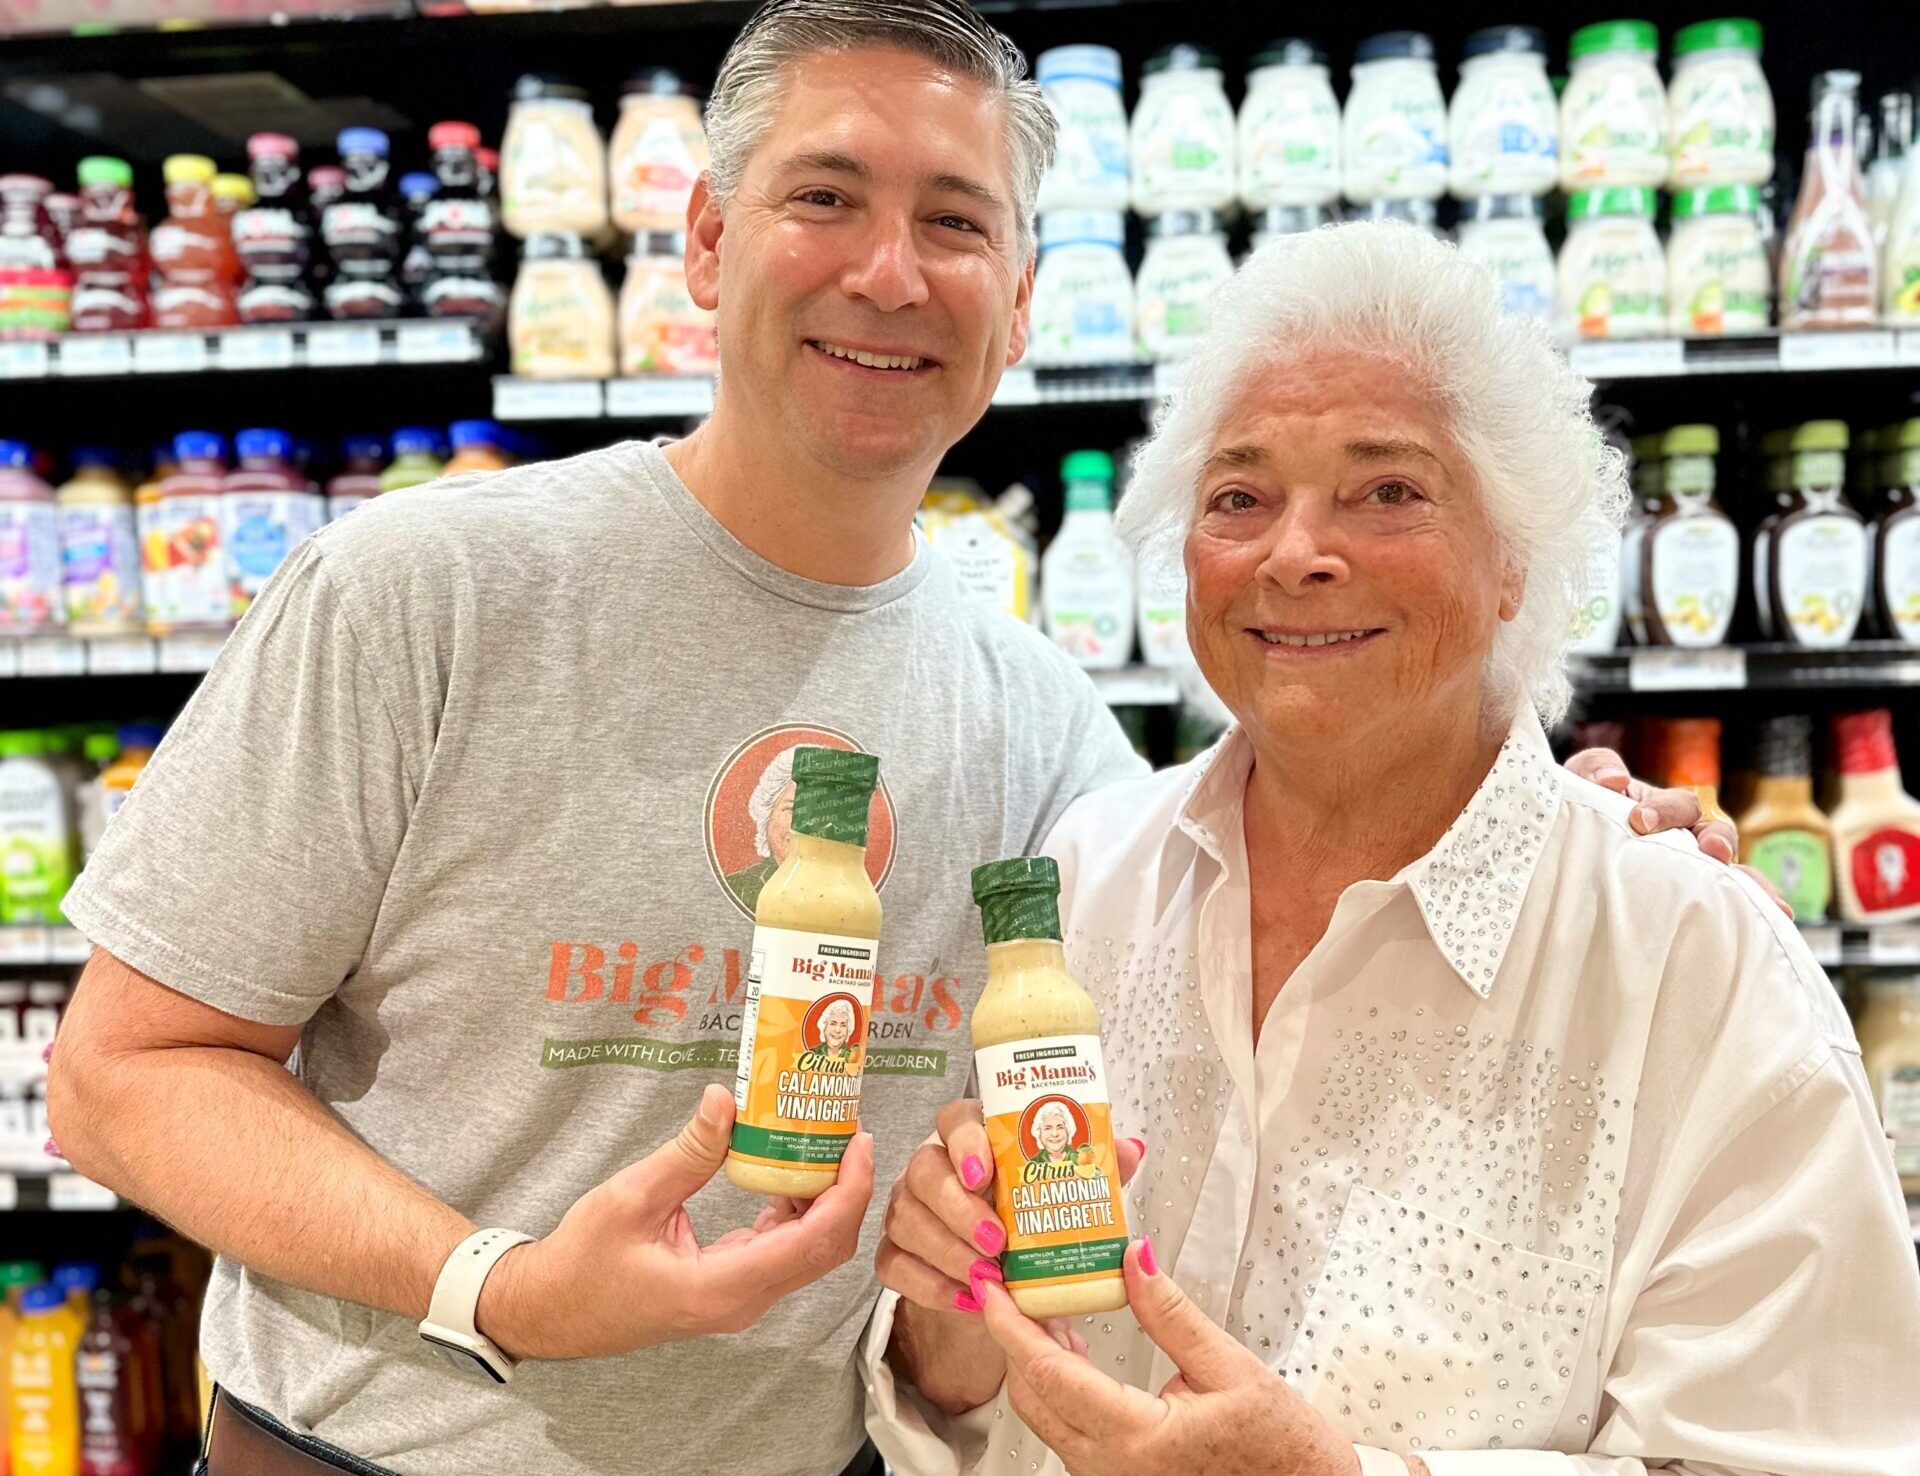 Lois Marks and Ethan Shapiro holiding Big Mama's Calamondin Vinaigrette in the grocery store aisle